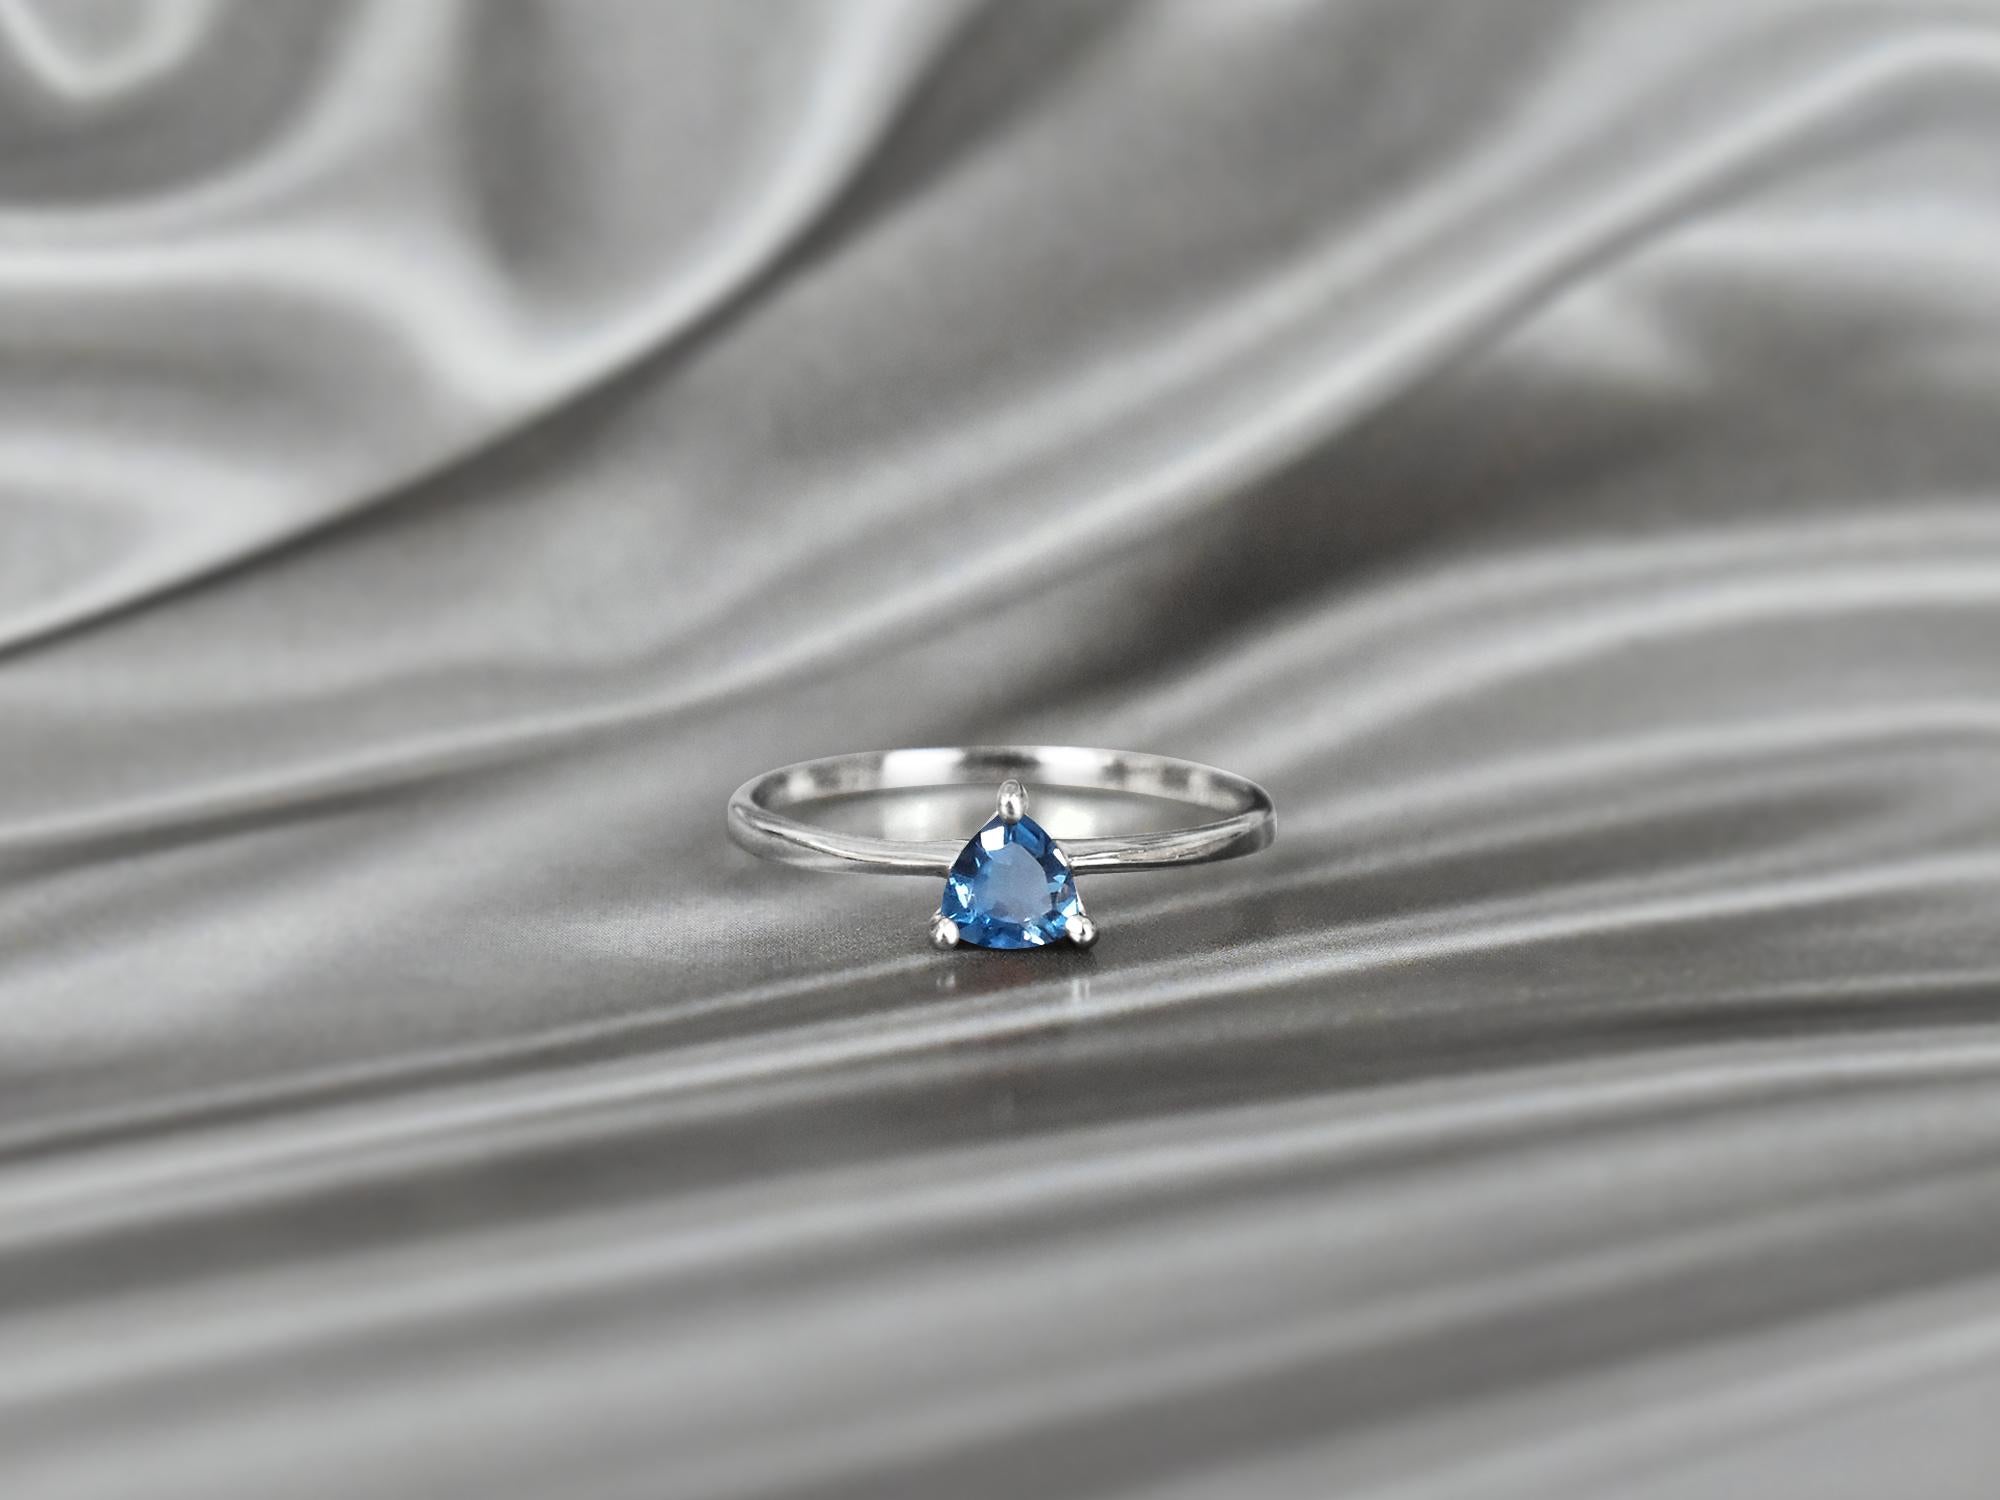 For Sale:  14k Gold Trillion Gemstone 6 mm Trillion Gemstone Engagement Ring Stackable Ring 7